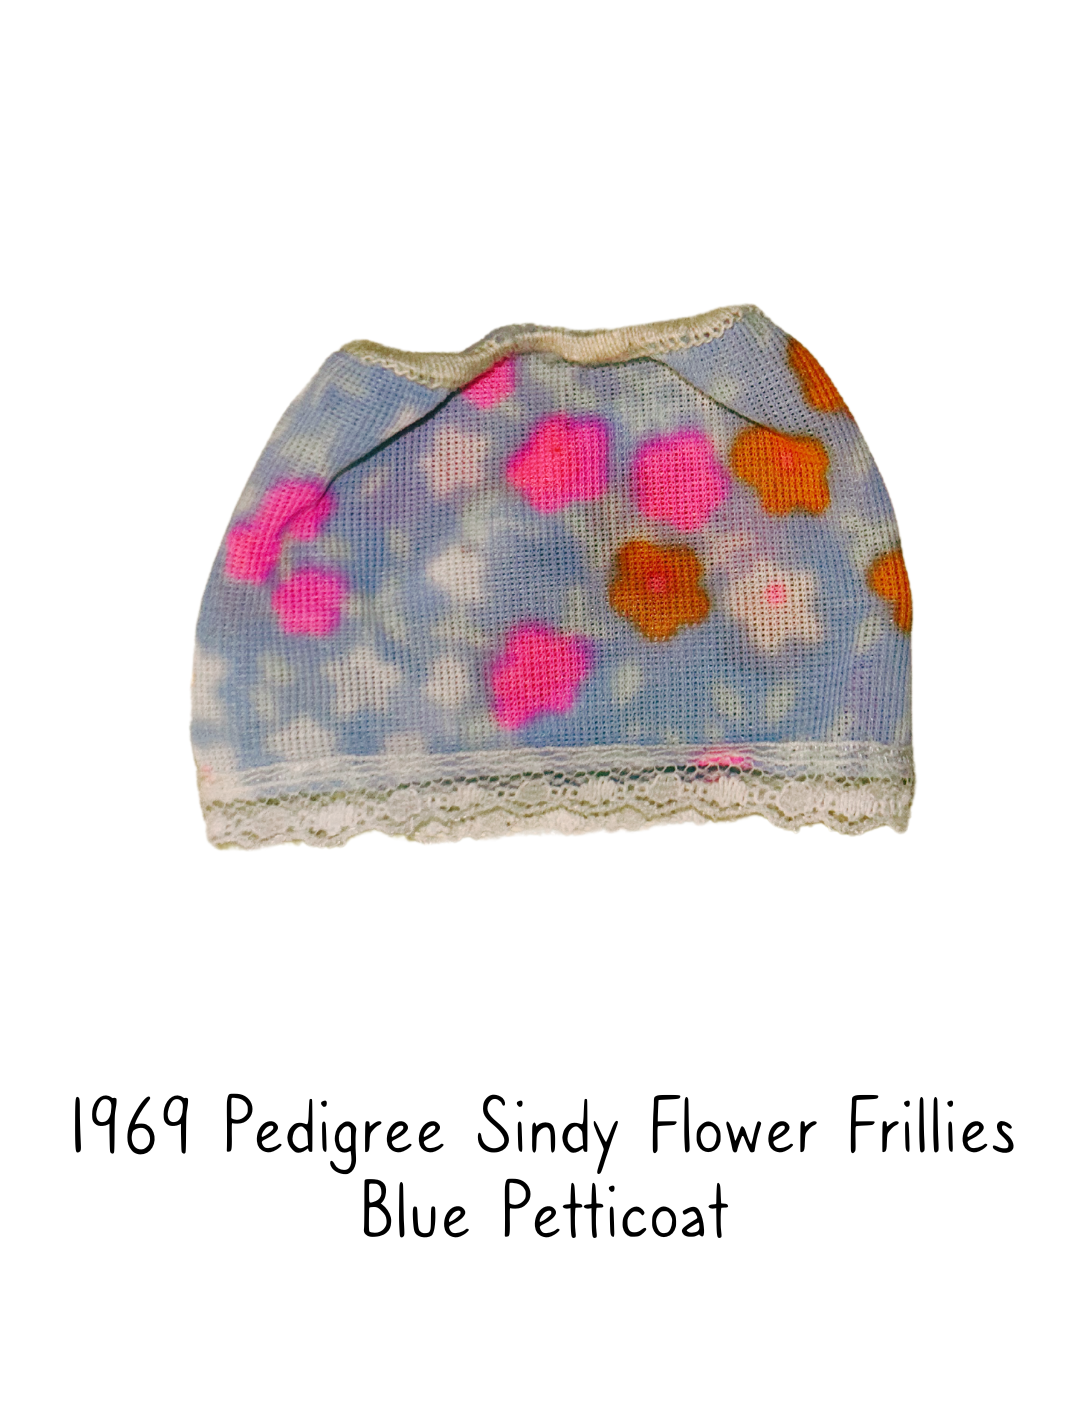 1969 Pedigree Sindy Flower Frillies Blue Petticoat